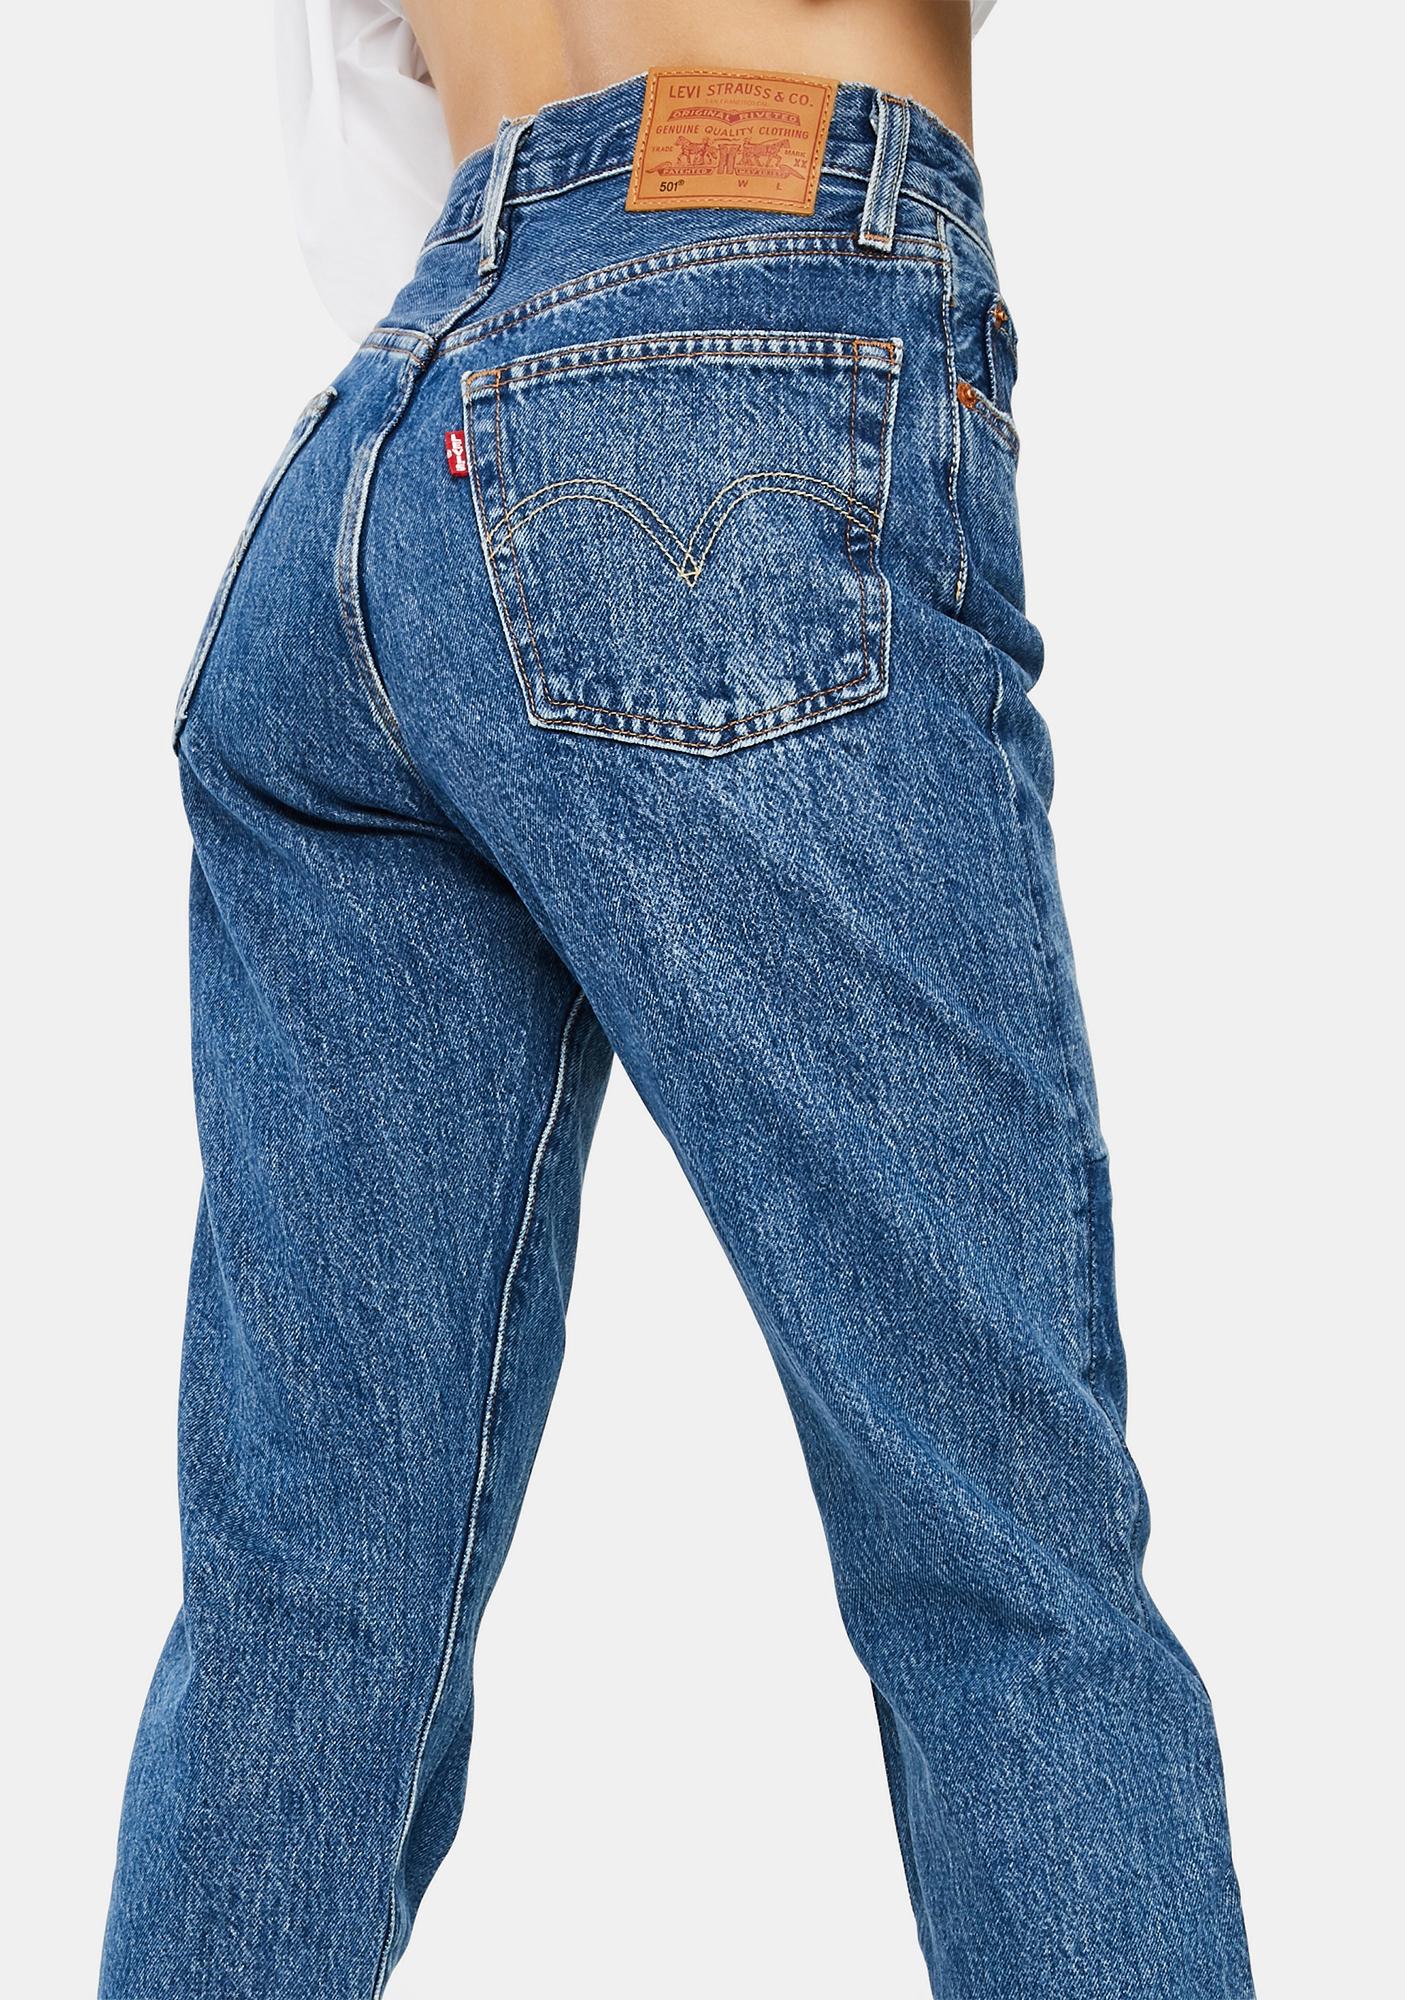 genuine denim jeans